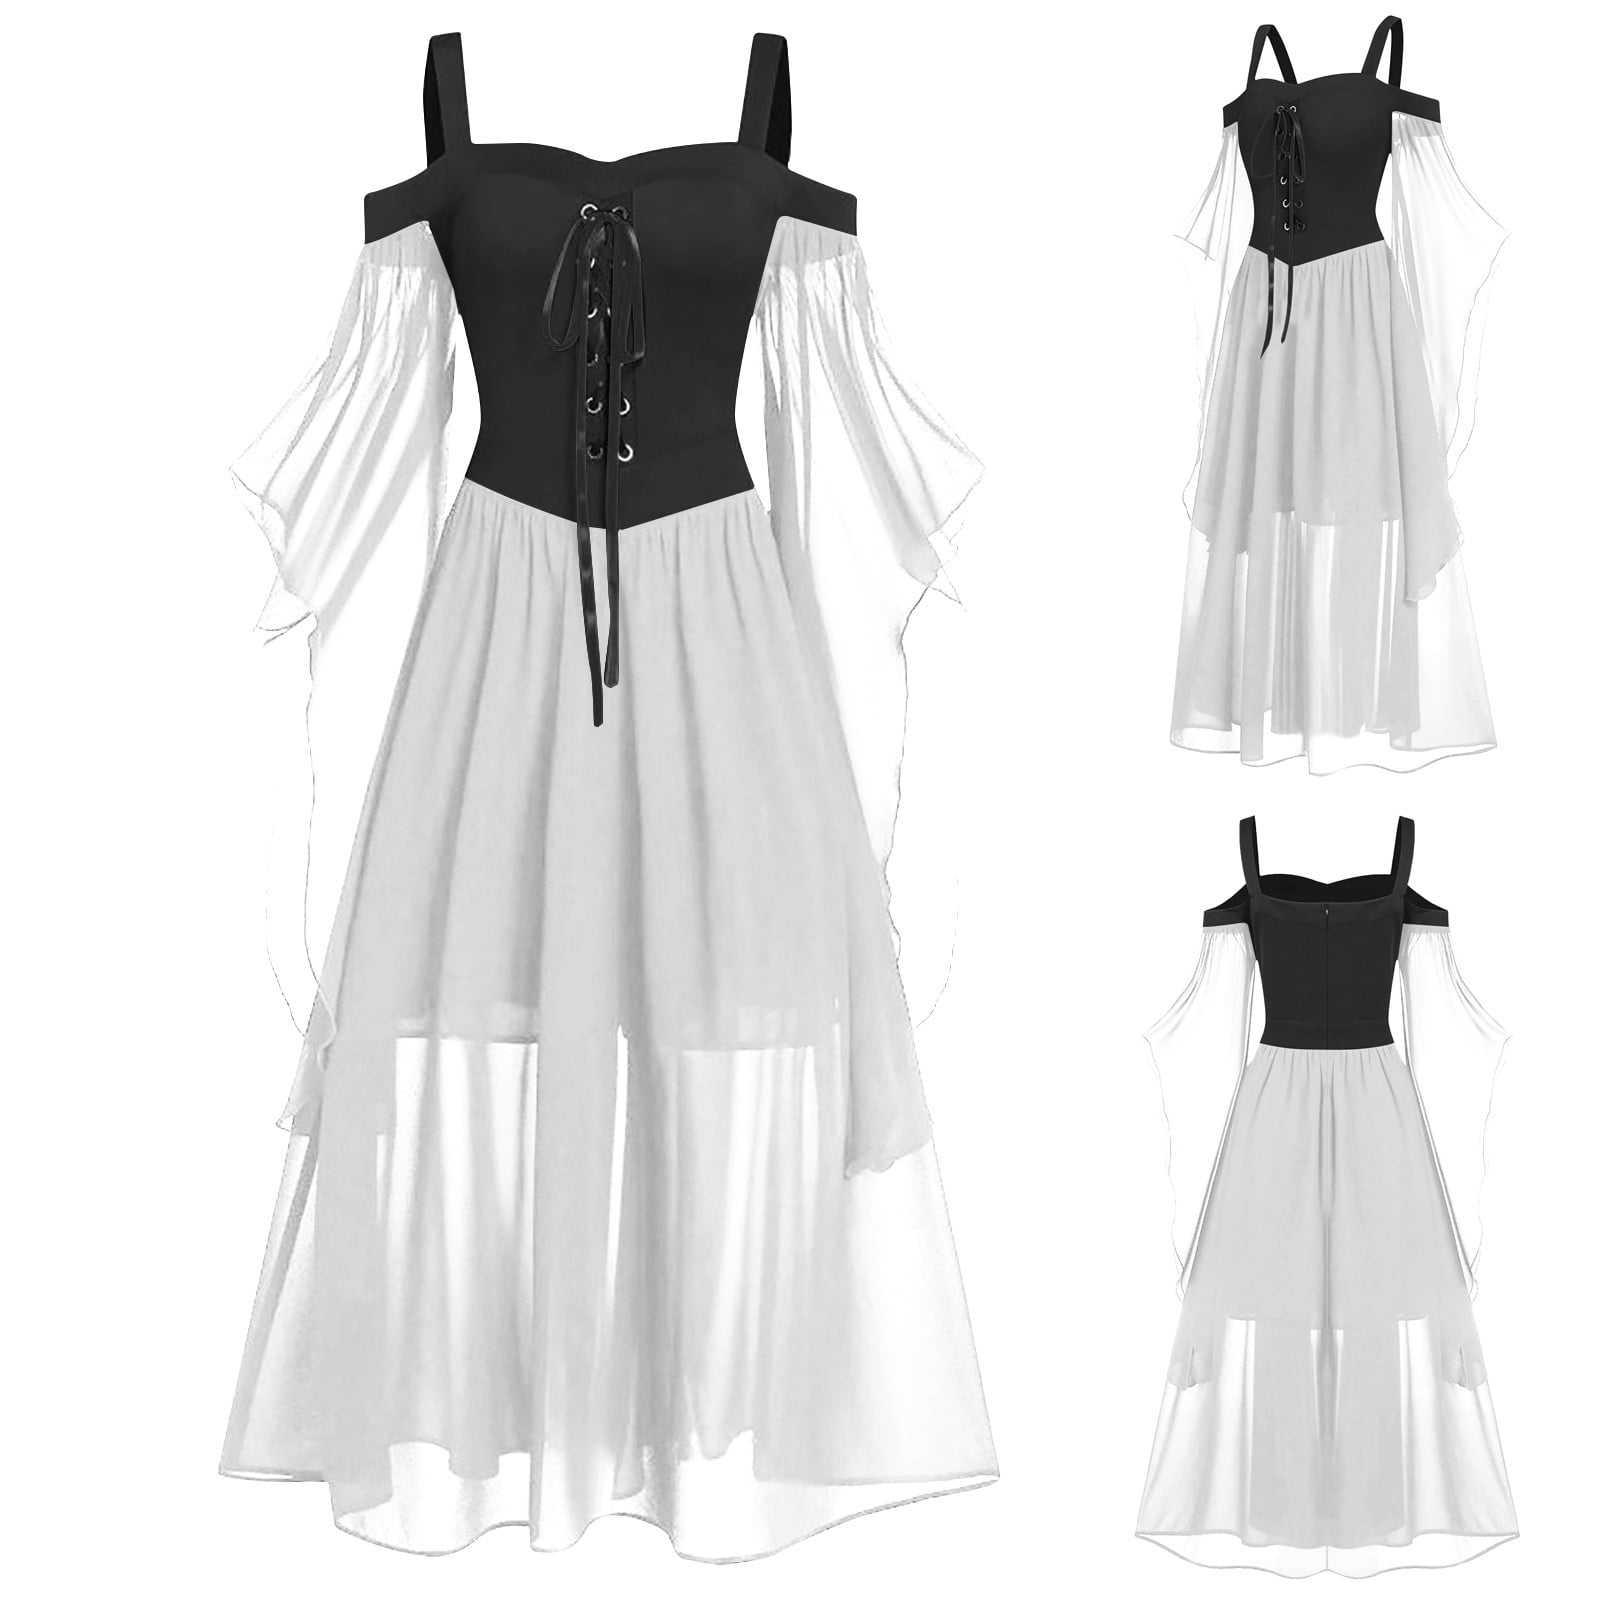 RYRJJ Women's Retro Medieval Renaissance Costume Dresses Plus Size Vintage  Flare Long Sleeve Gothic Dress with Corset Party Short Mini Dress(White,S)  